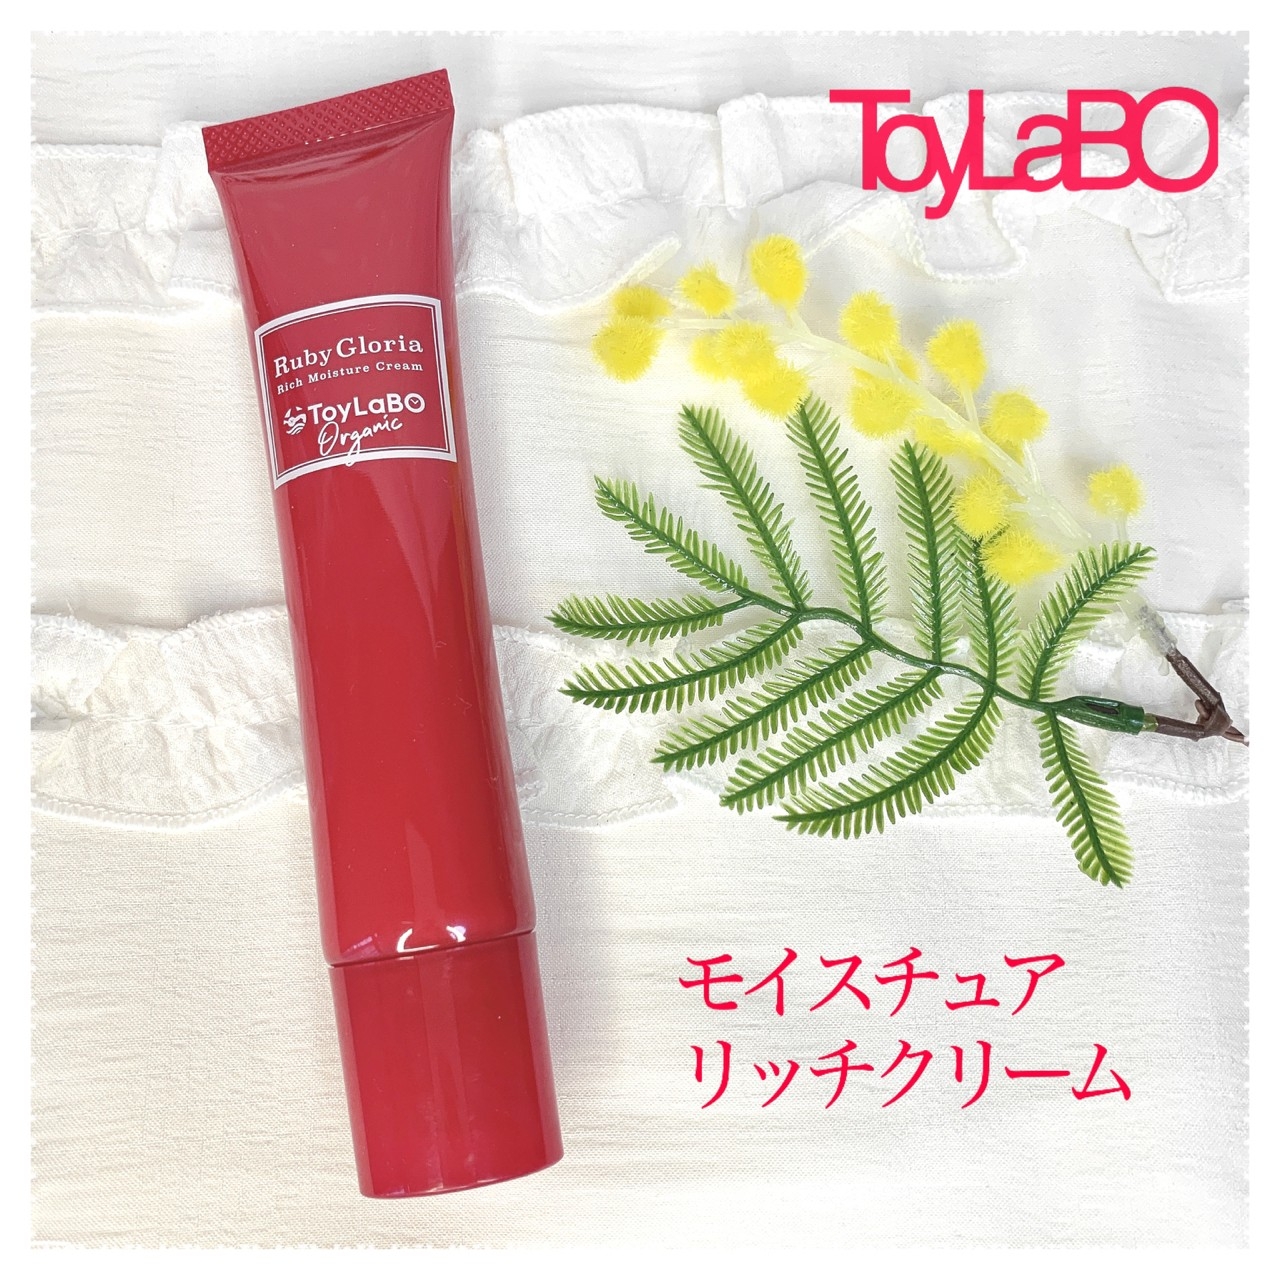 ToyLaBO(トイラボ) ルビーグロリア リッチモイスチュアクリームの 